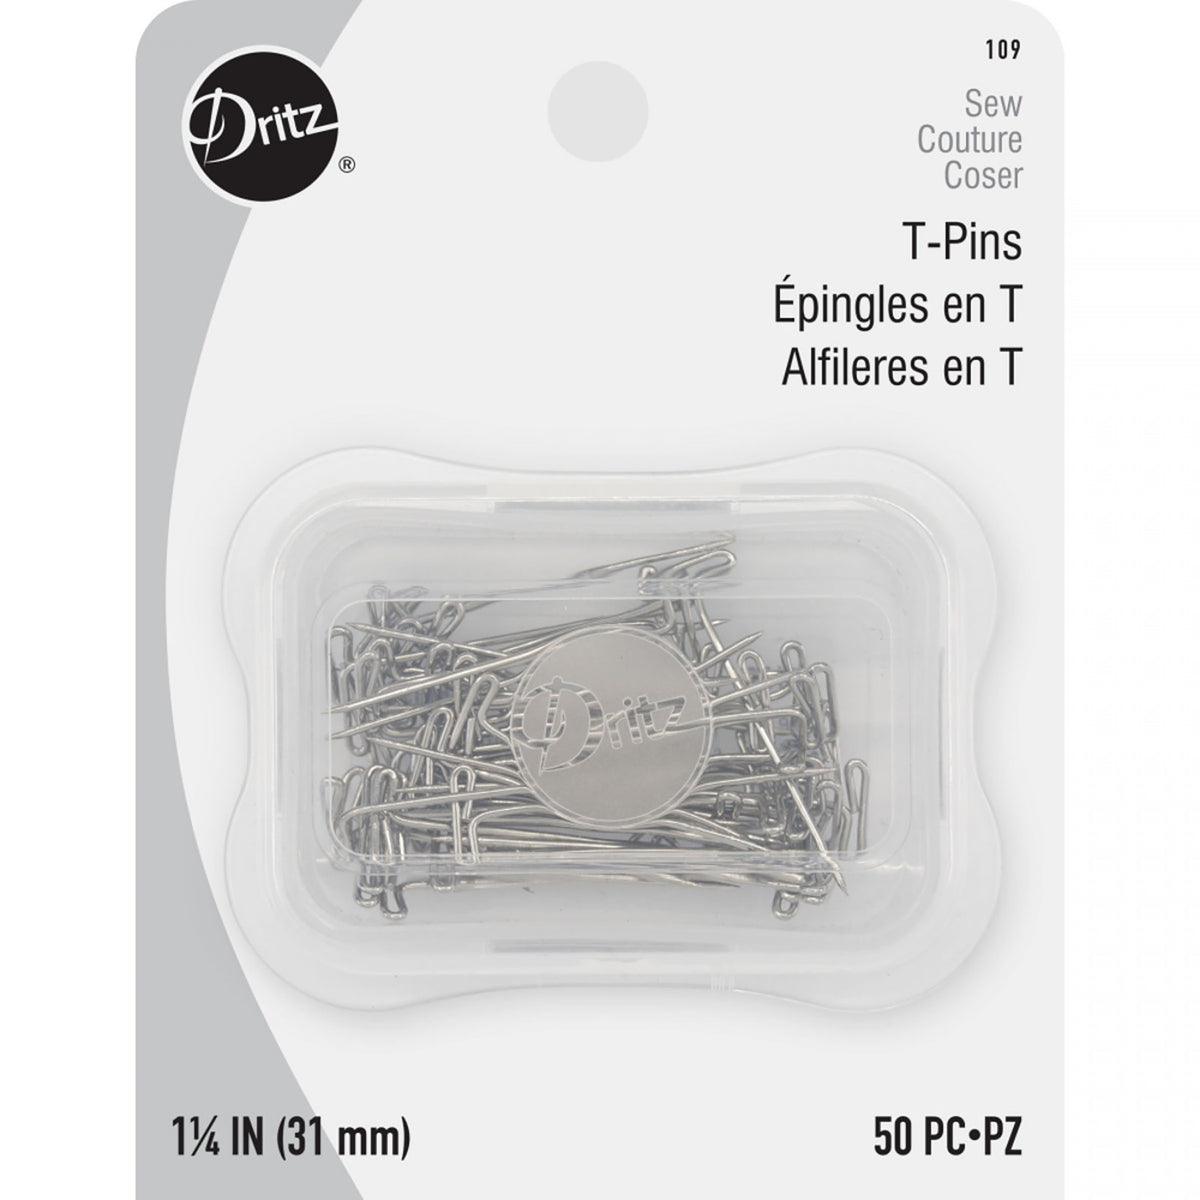 Dritz Dressmaker Pins Size 17 Nickle Plated Steel - 1 1/16 - 750